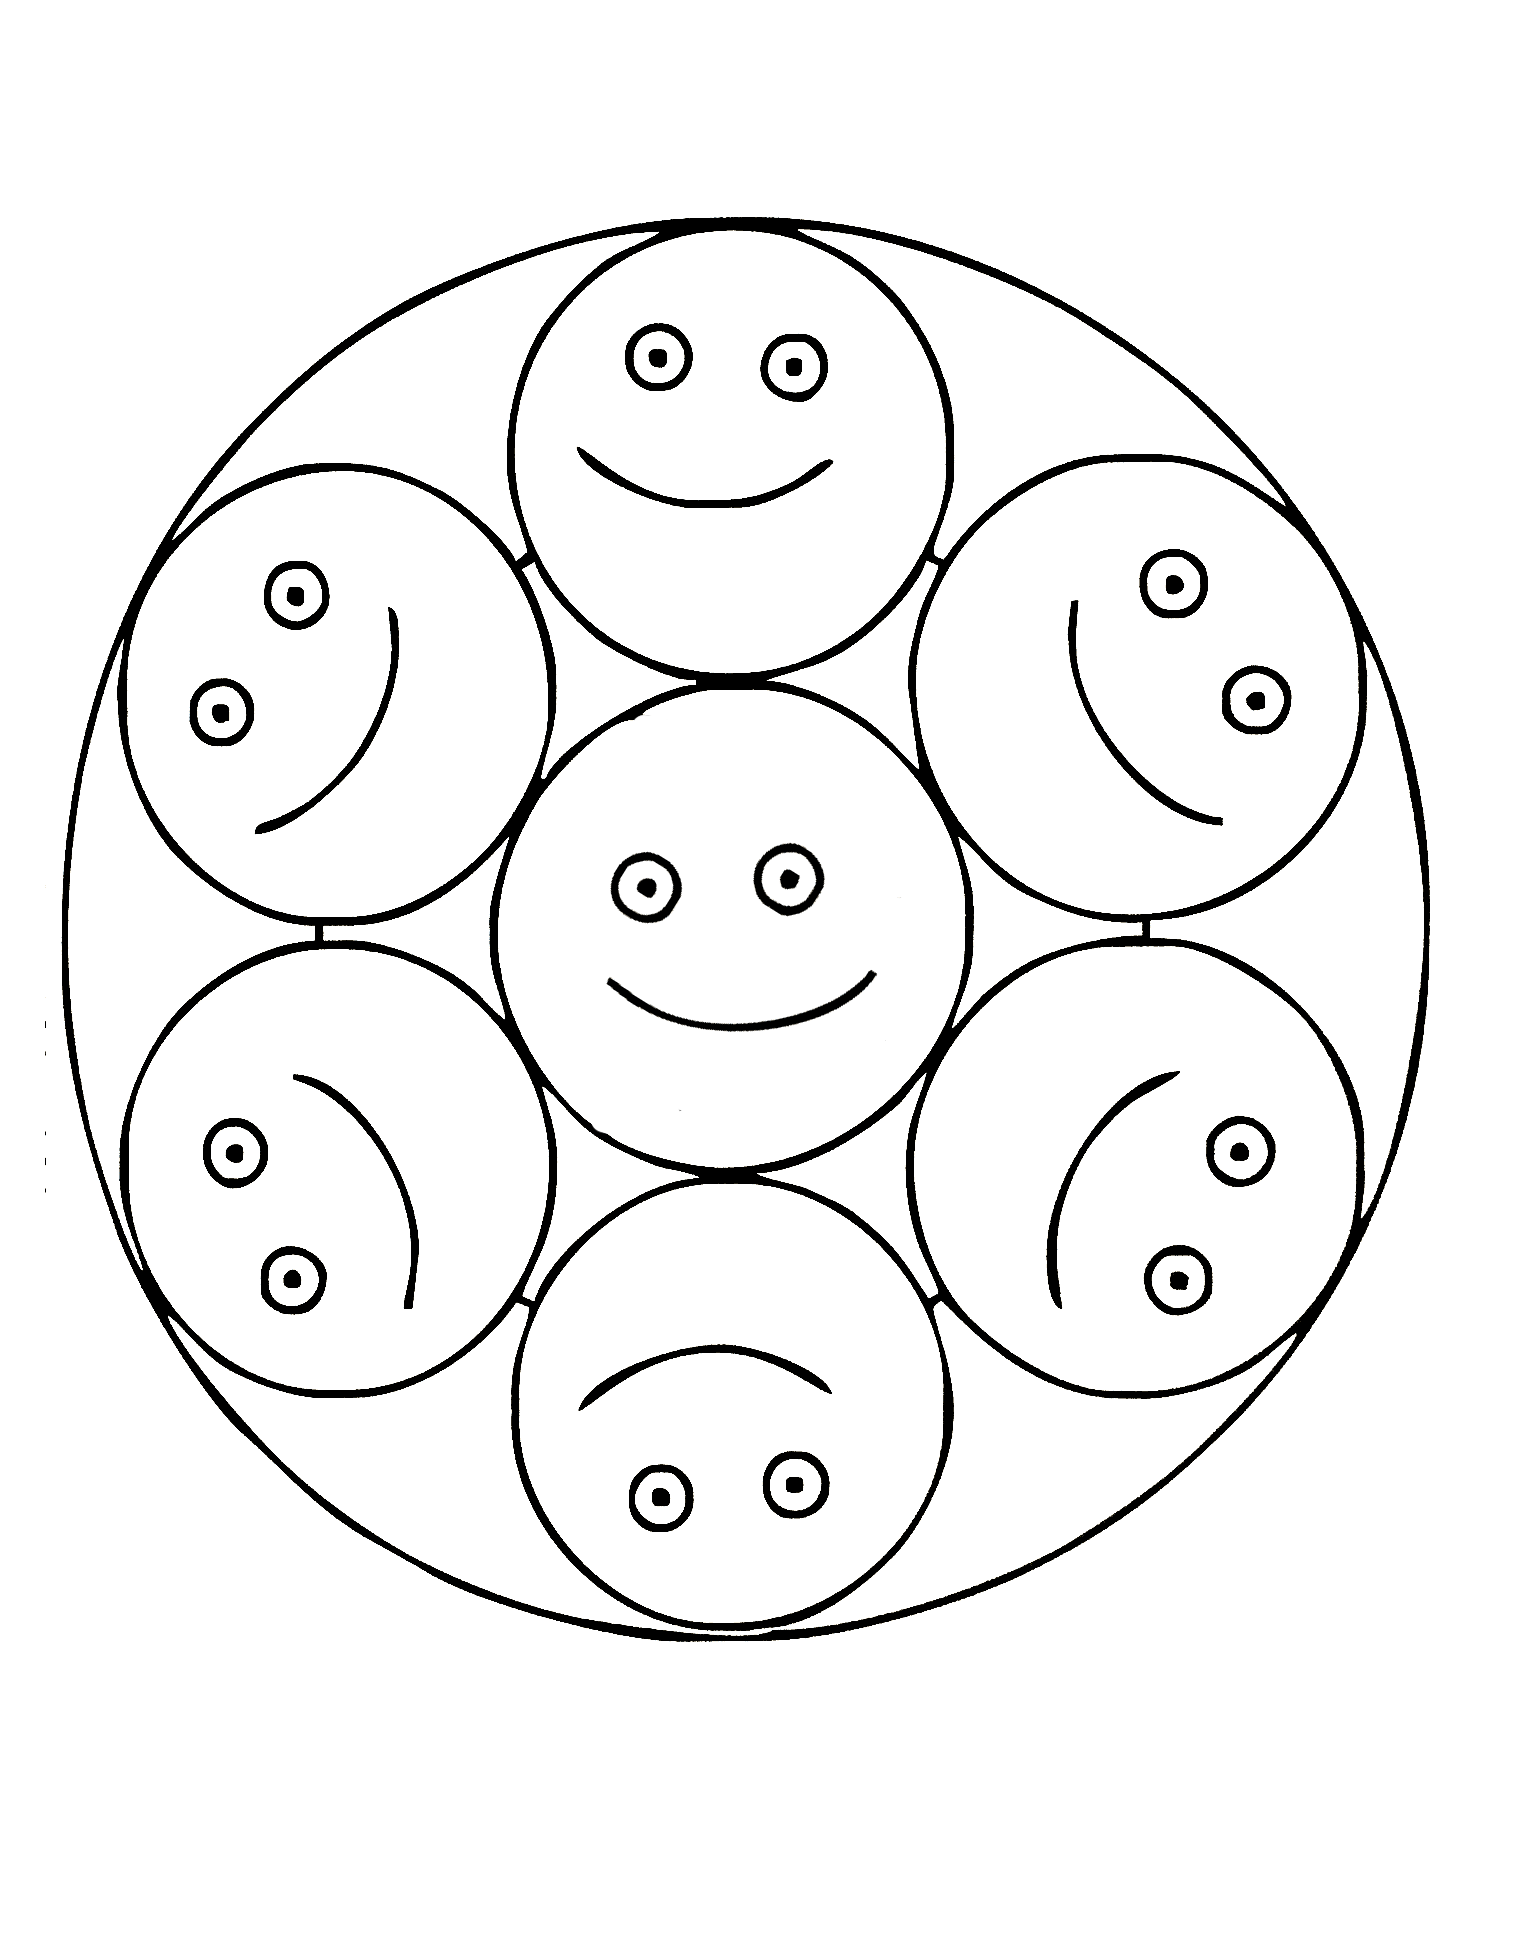 Mandala molto semplice con smiley